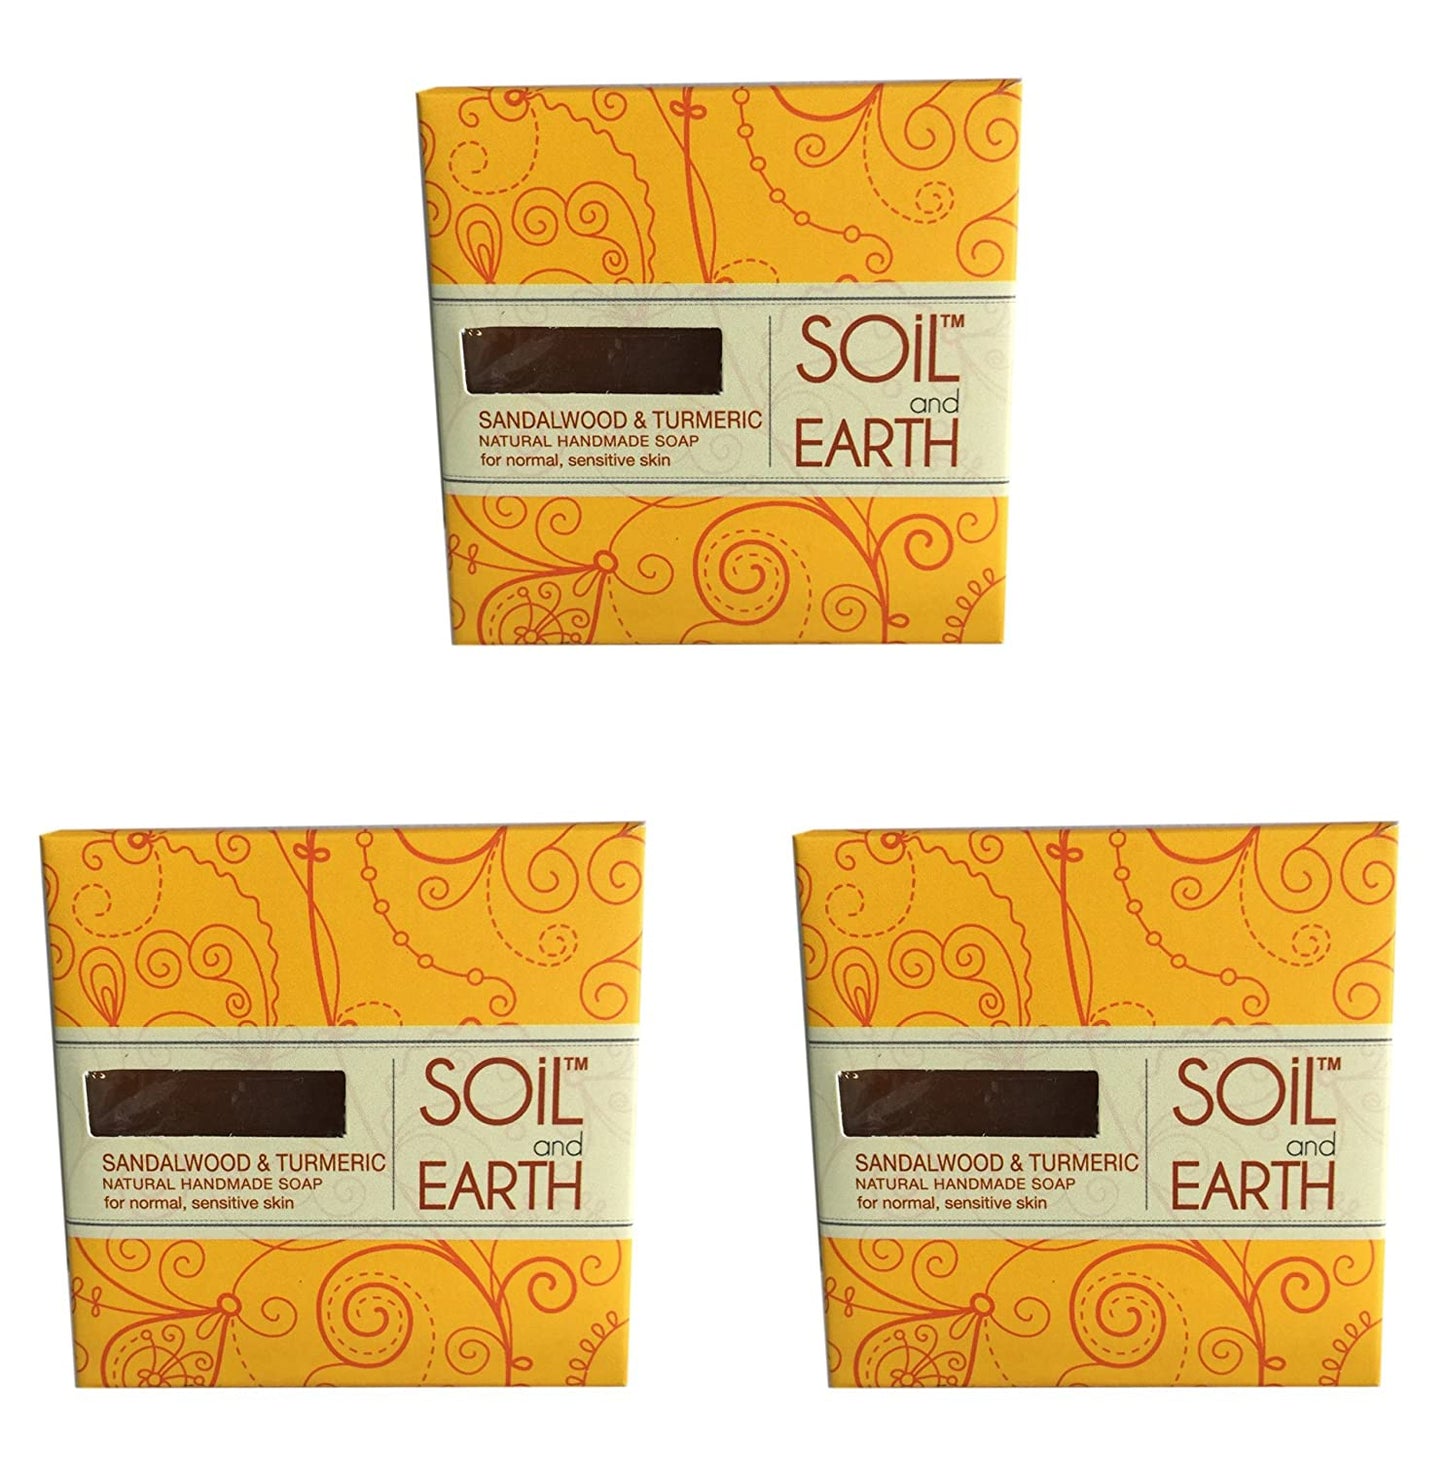 SOIL AND EARTH NATURAL HANDMADE SOAP- SANDALWOOD & TURMERIC (Pack of 4)